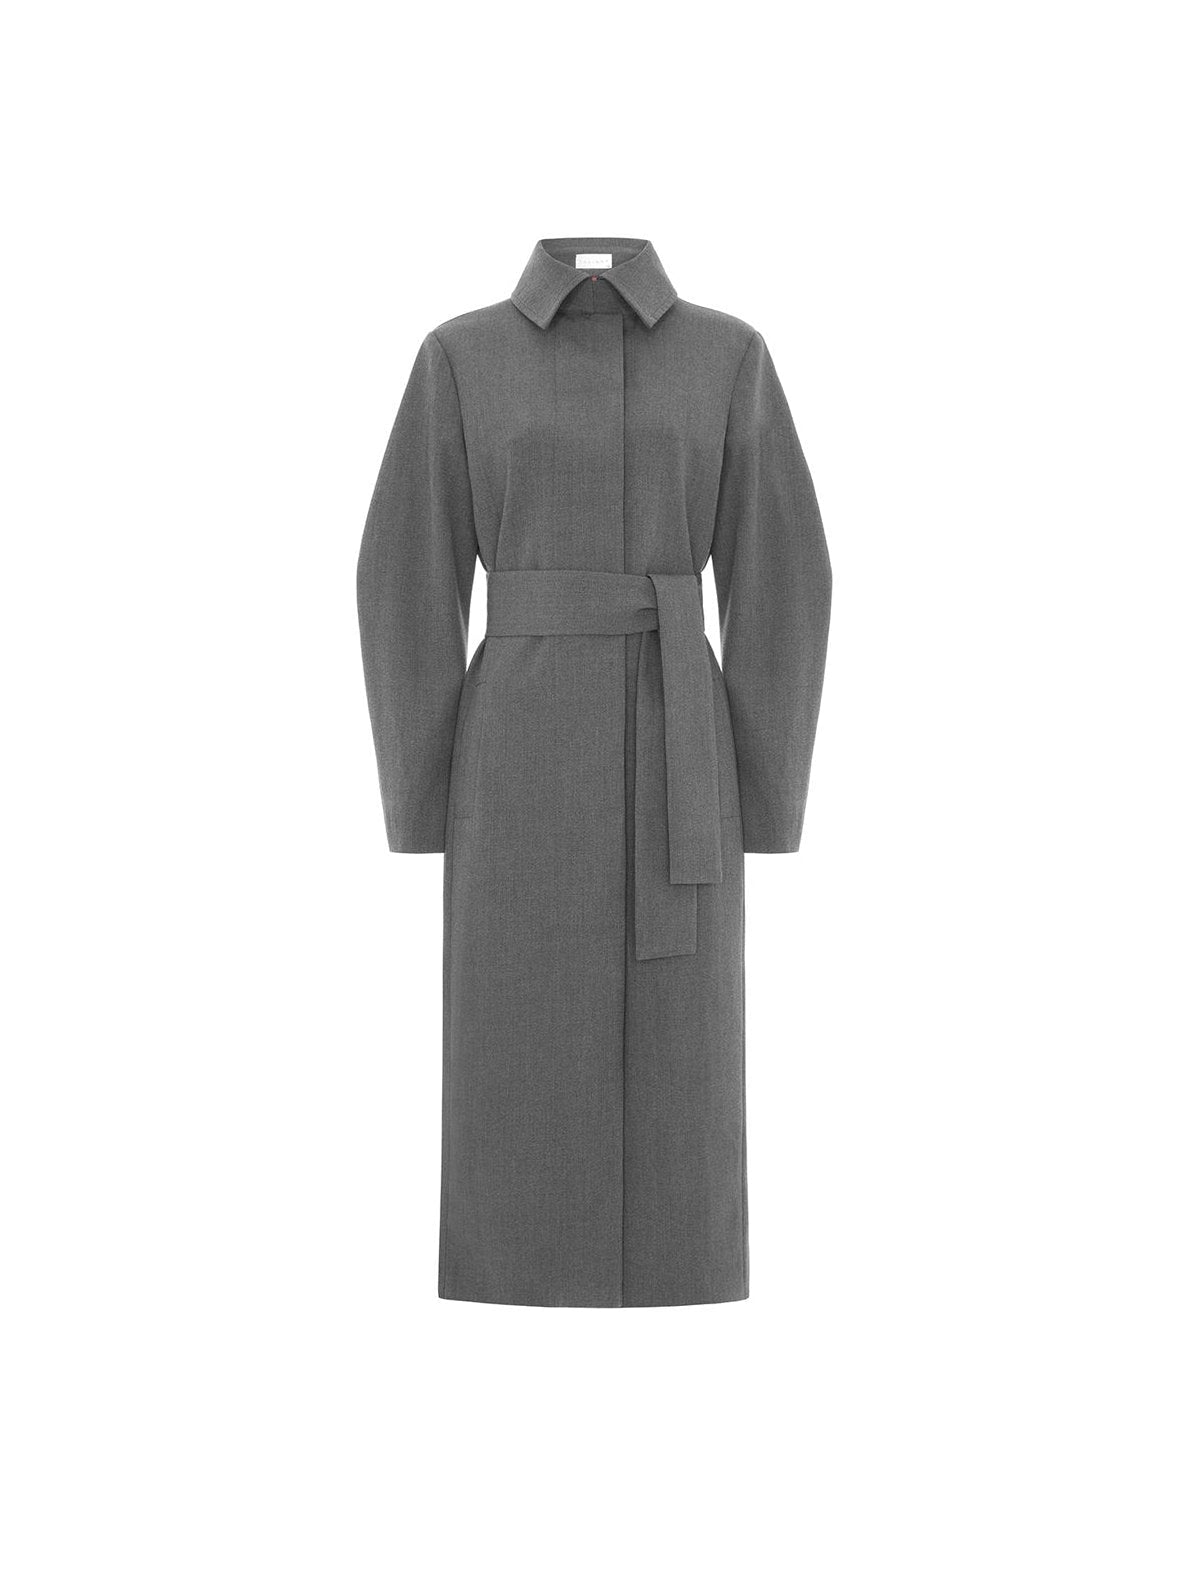 Sabinna Violet Trench Coat in dark Grey - LDC